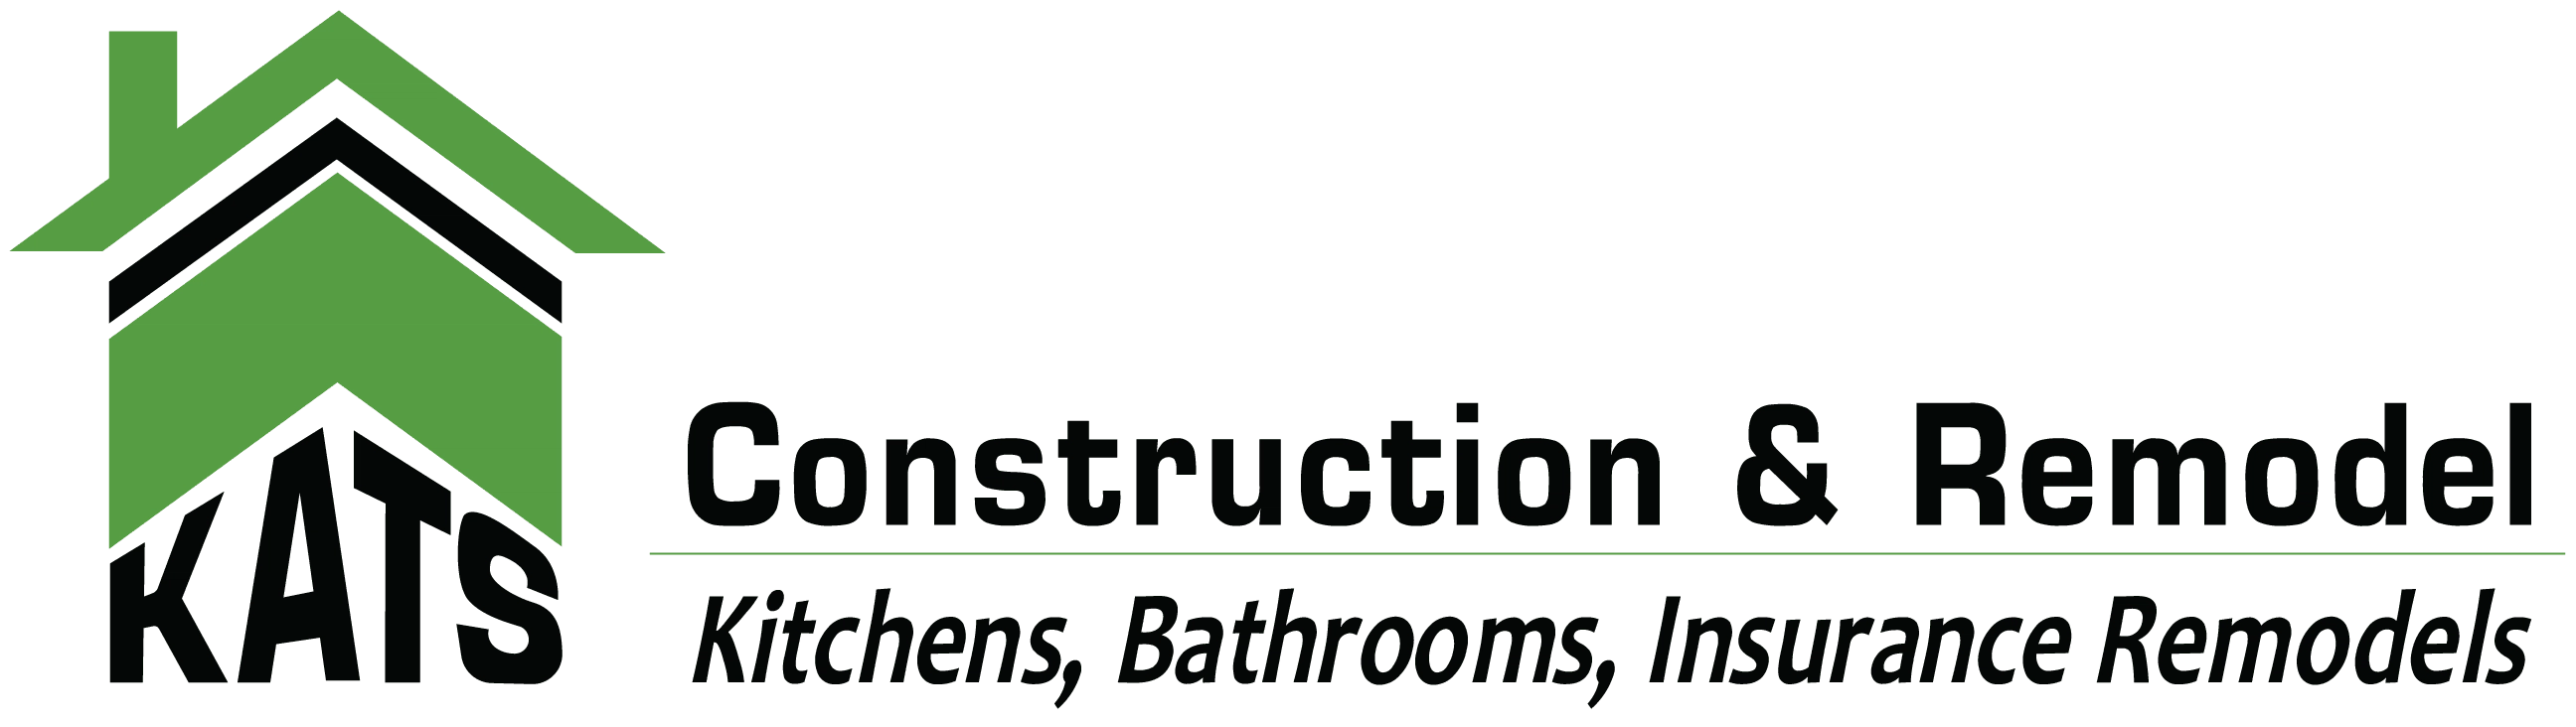 Kats Construction & Remodel Logo